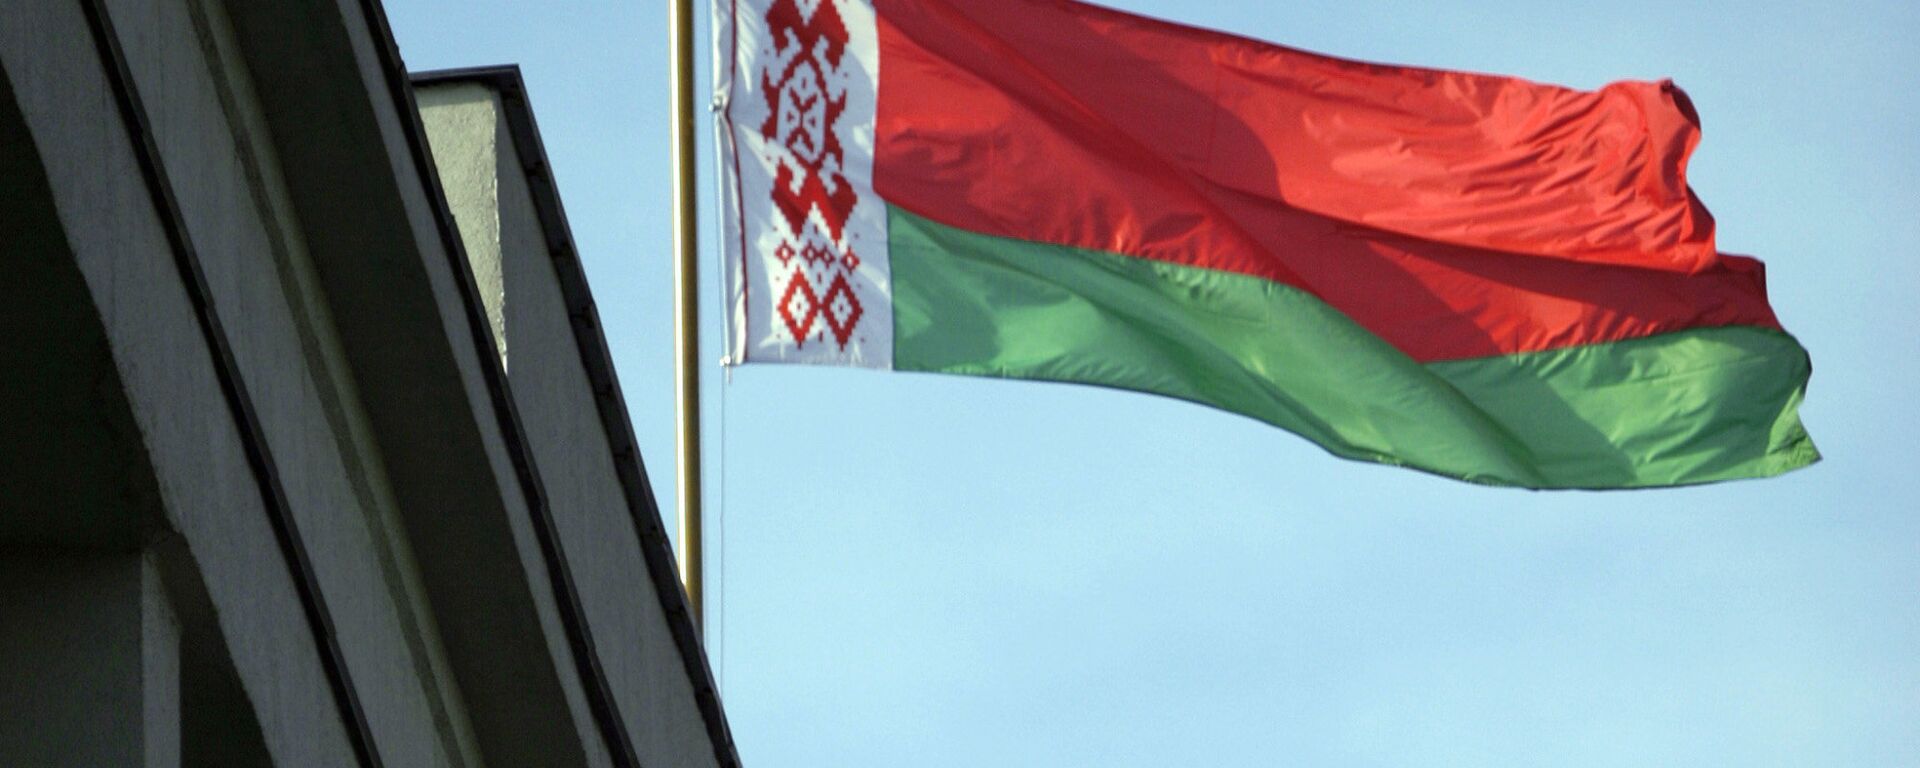 Bandera de Bielorrusia - Sputnik Mundo, 1920, 21.12.2020